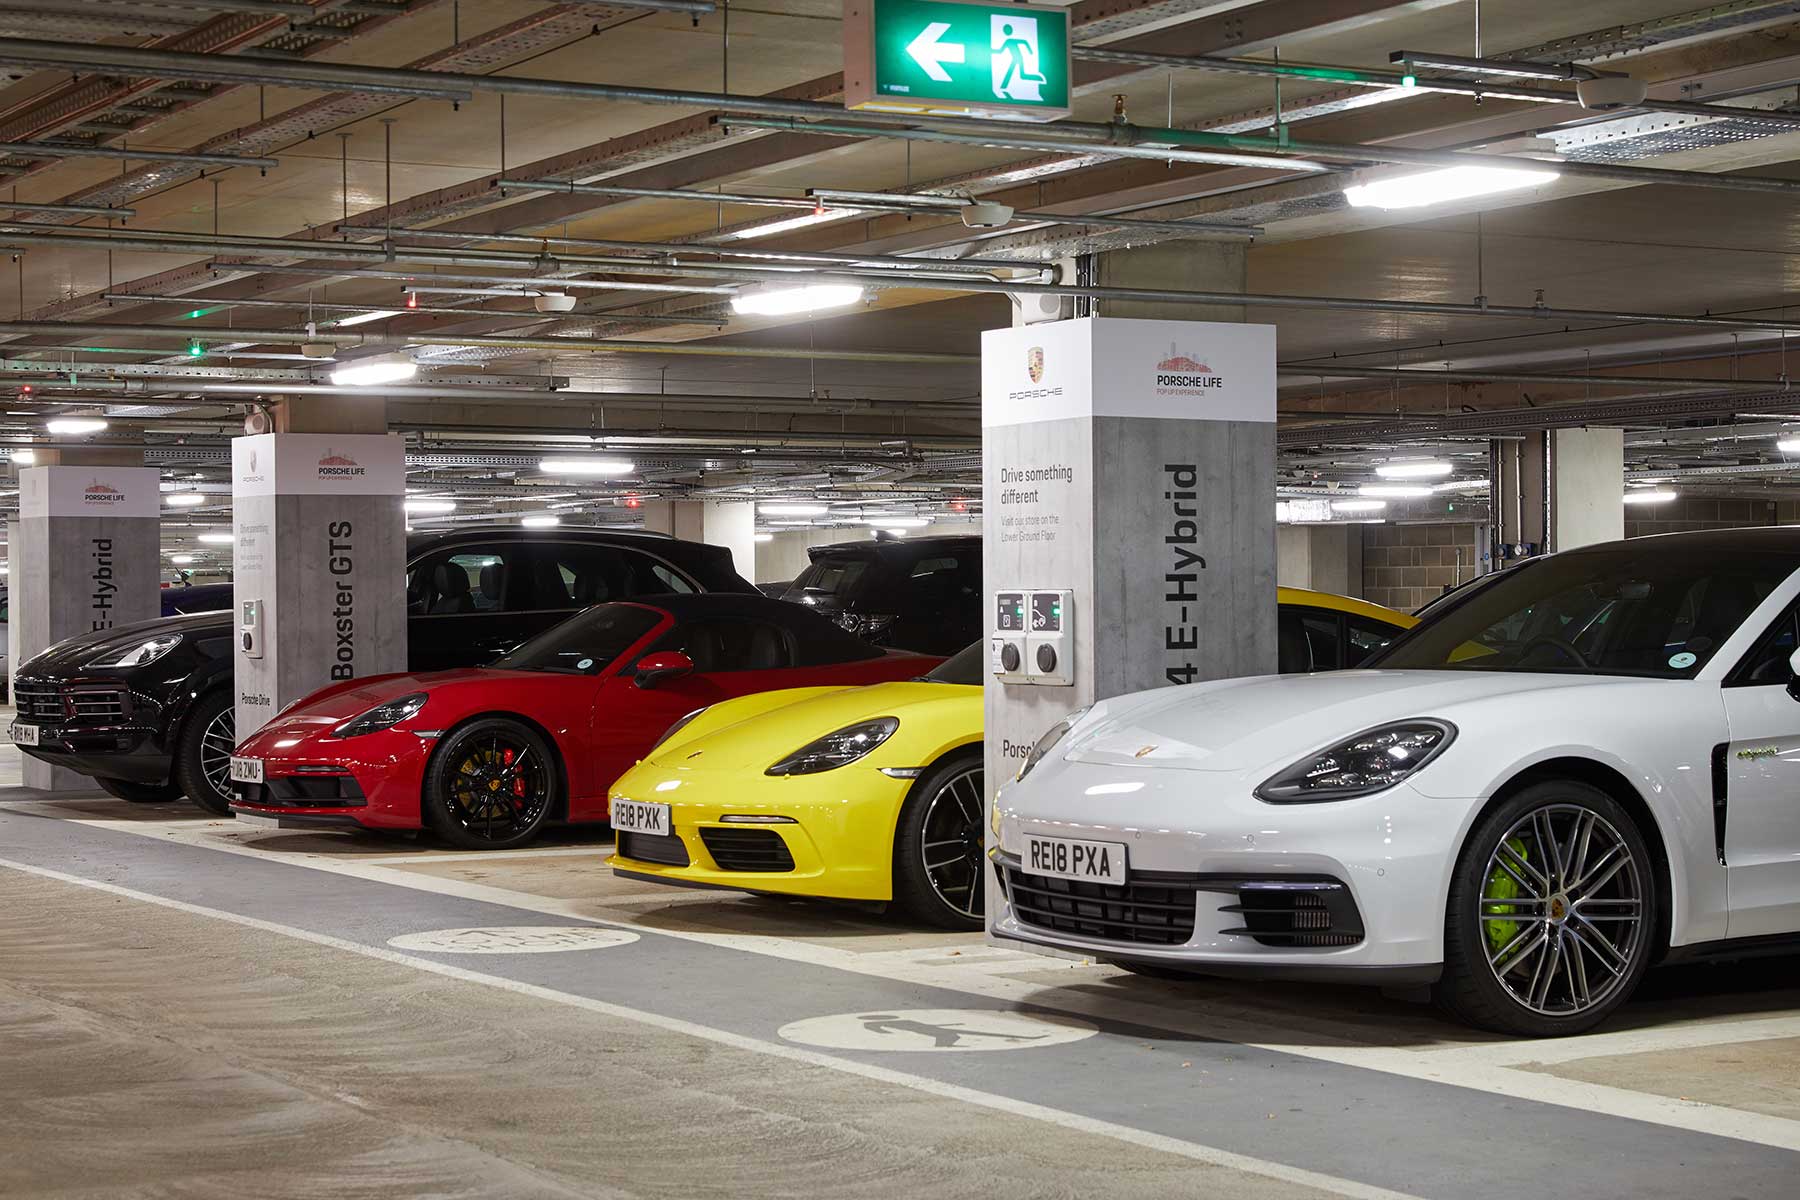 Test drives at Oxford Porsche Life store